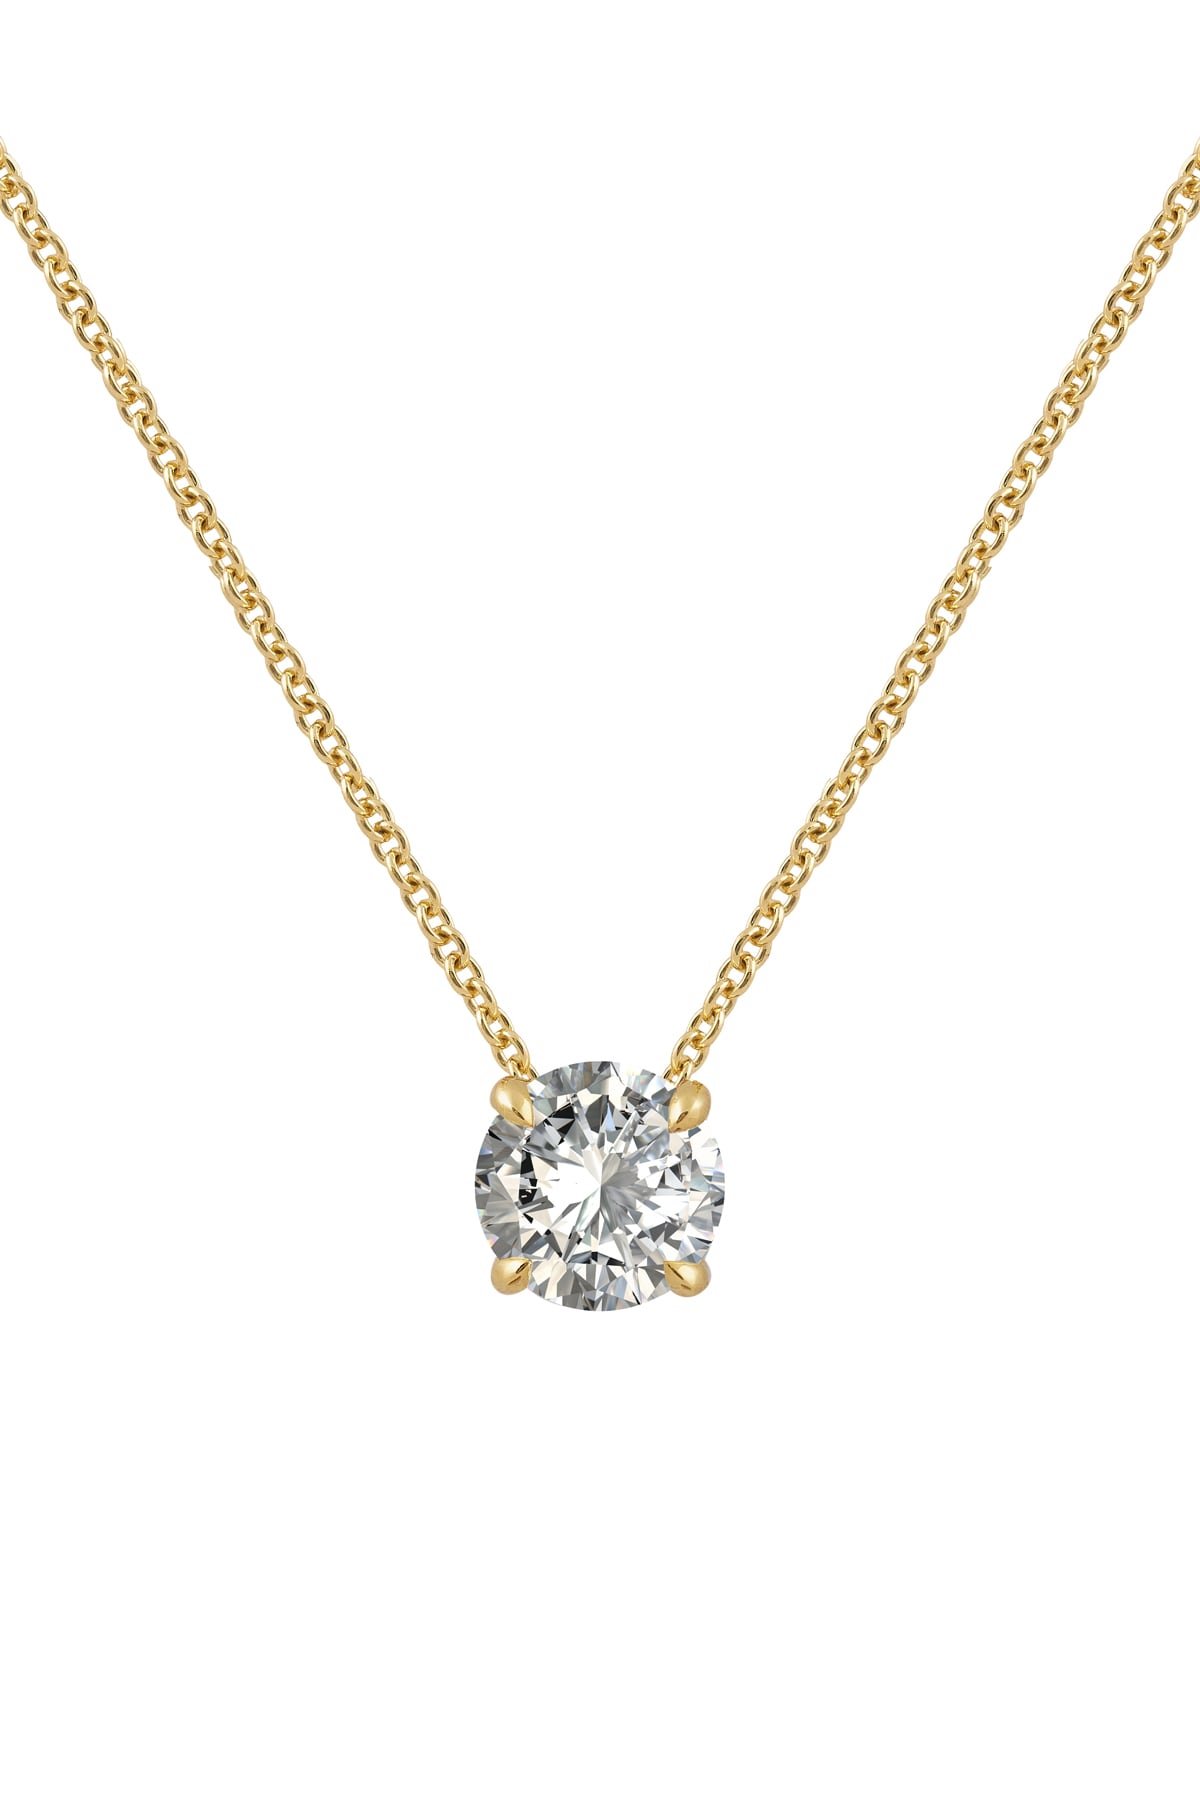 1.20ct Round Brilliant Cut Diamond Claw Set Slider Necklace from LeGassick Jewellery Gold Coast, Australia.